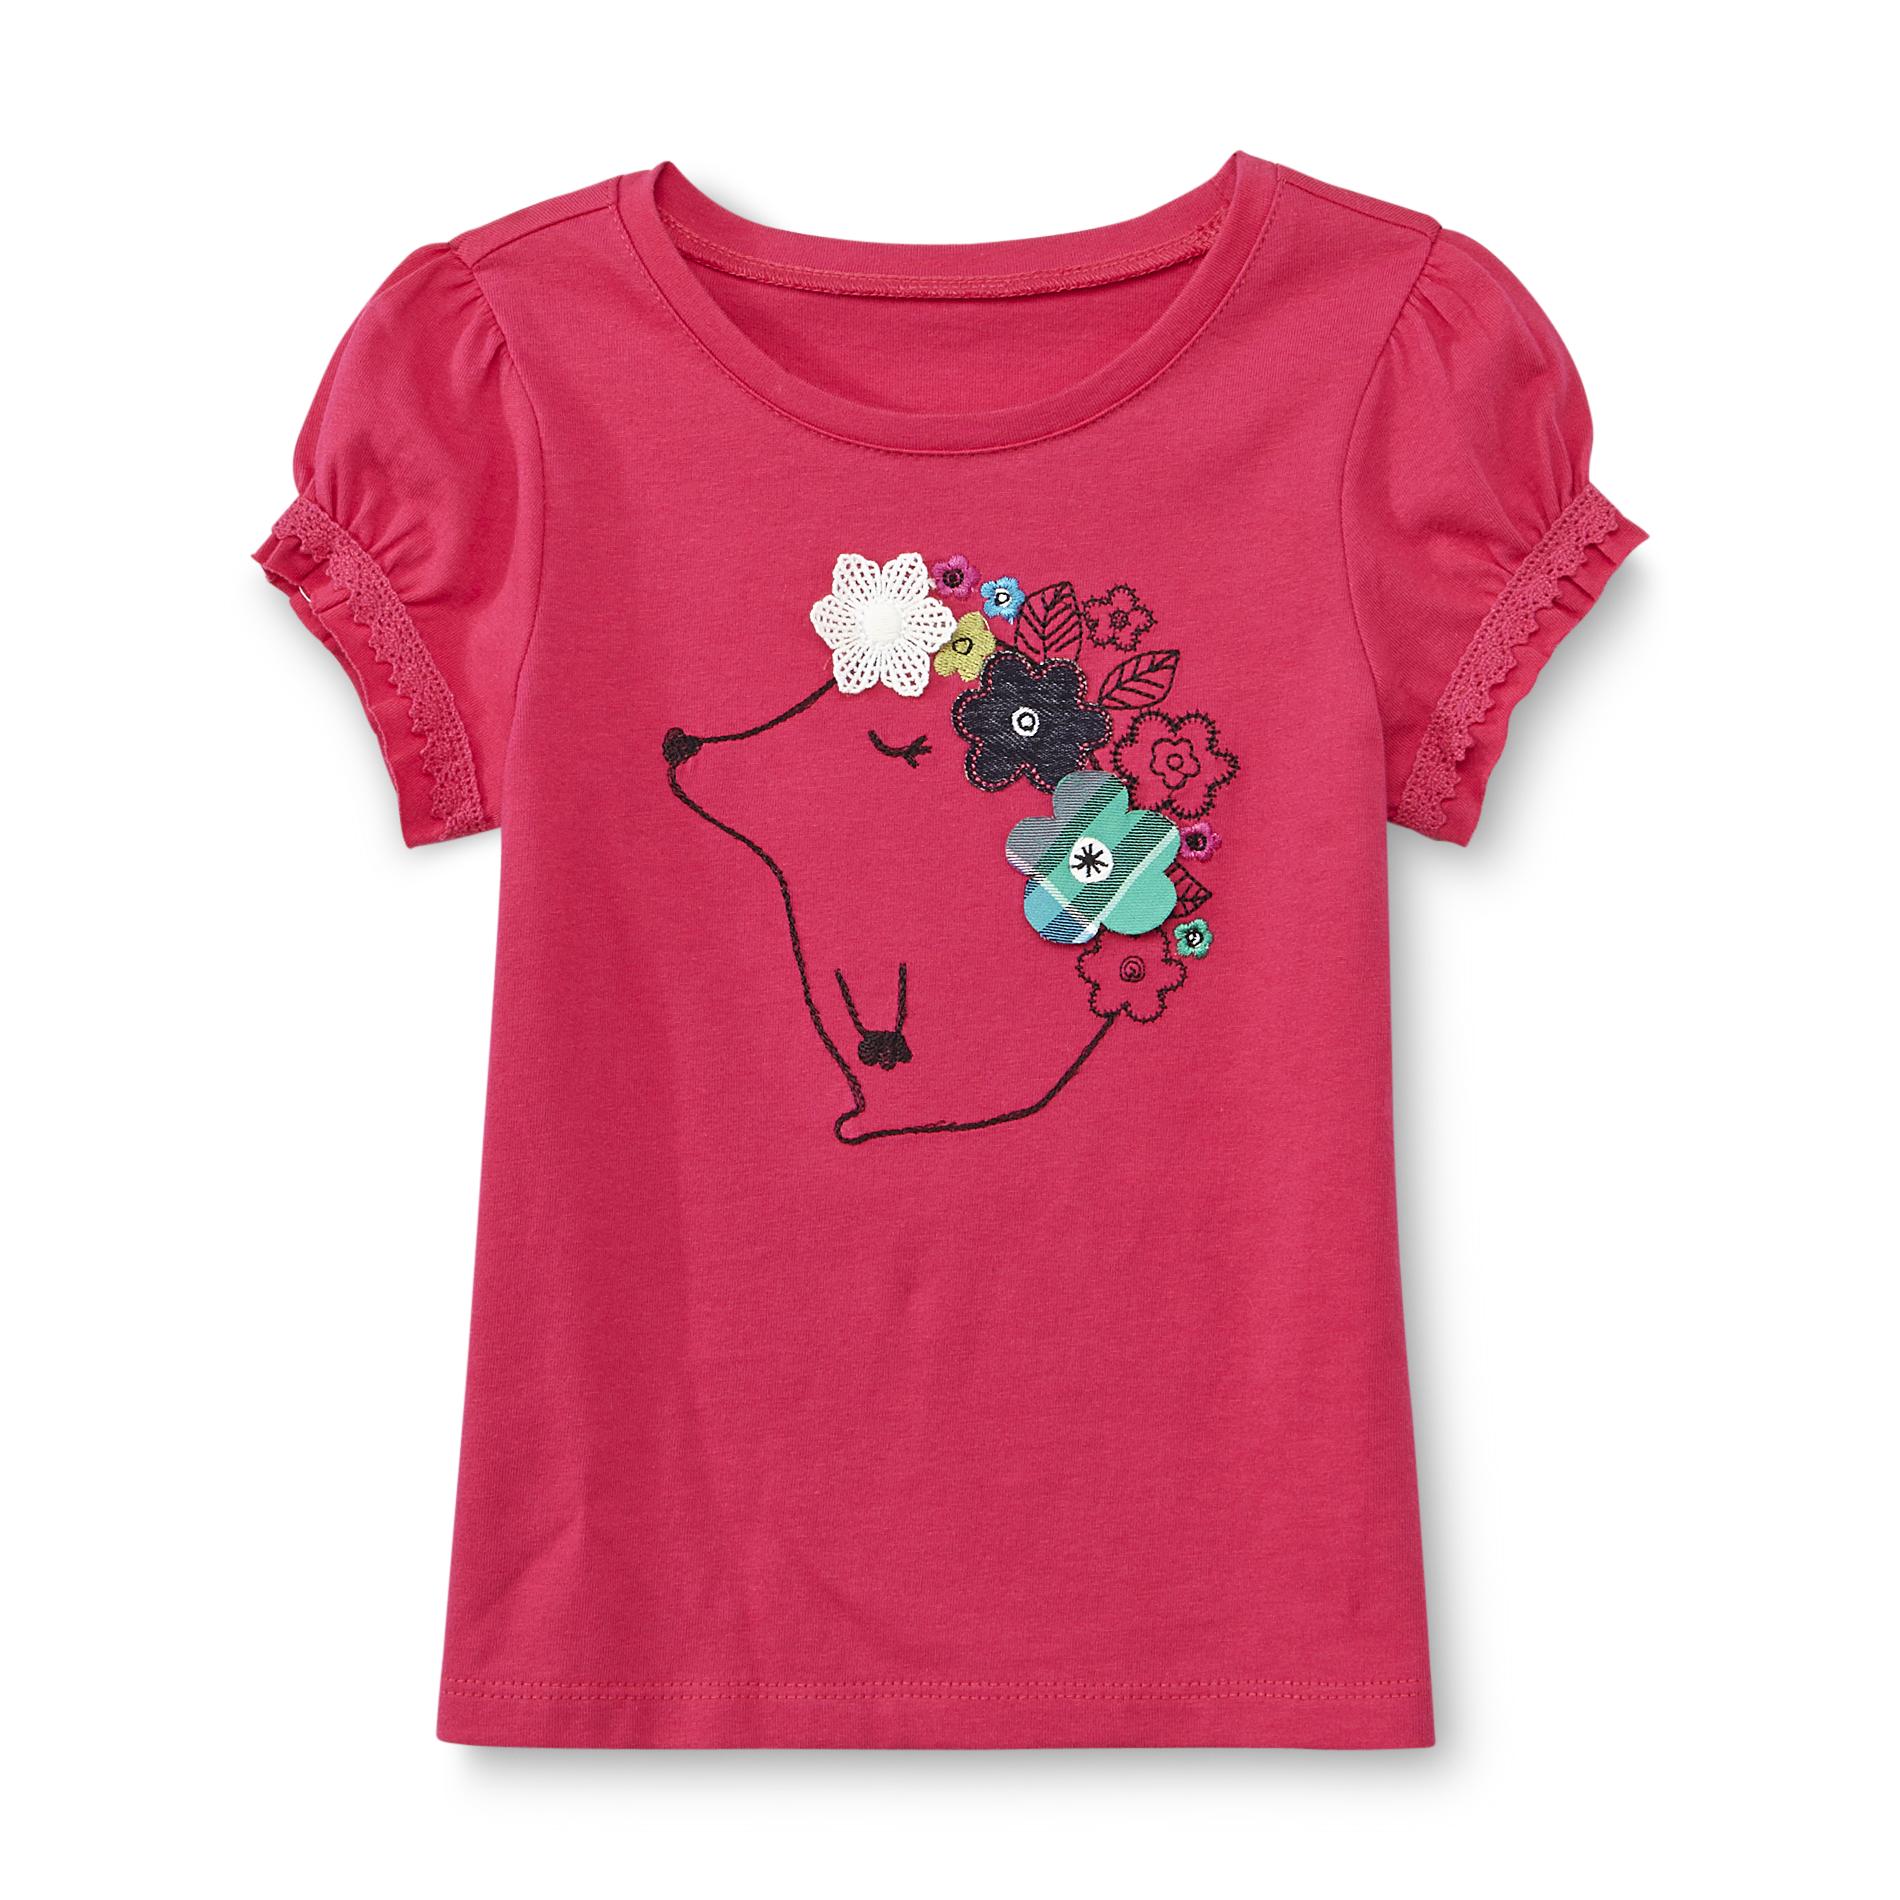 Toughskins Toddler Girl's Cap Sleeve T-Shirt - Hedgehog